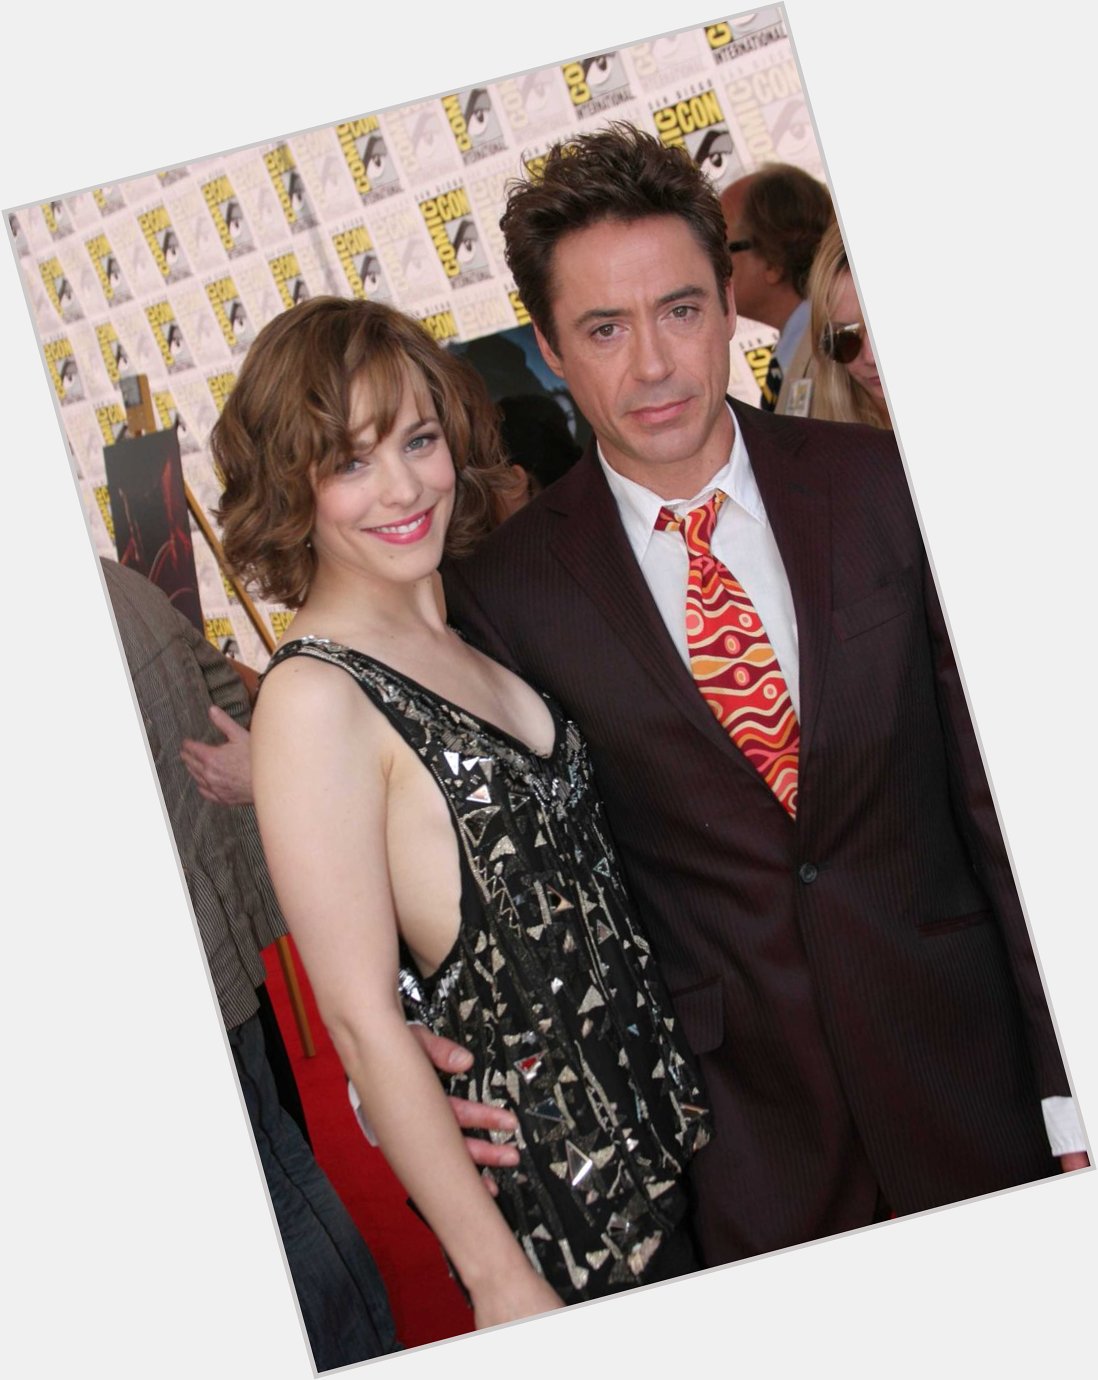 Happy Birthday to Rachel\s co-star, Robert Downey Jr! 